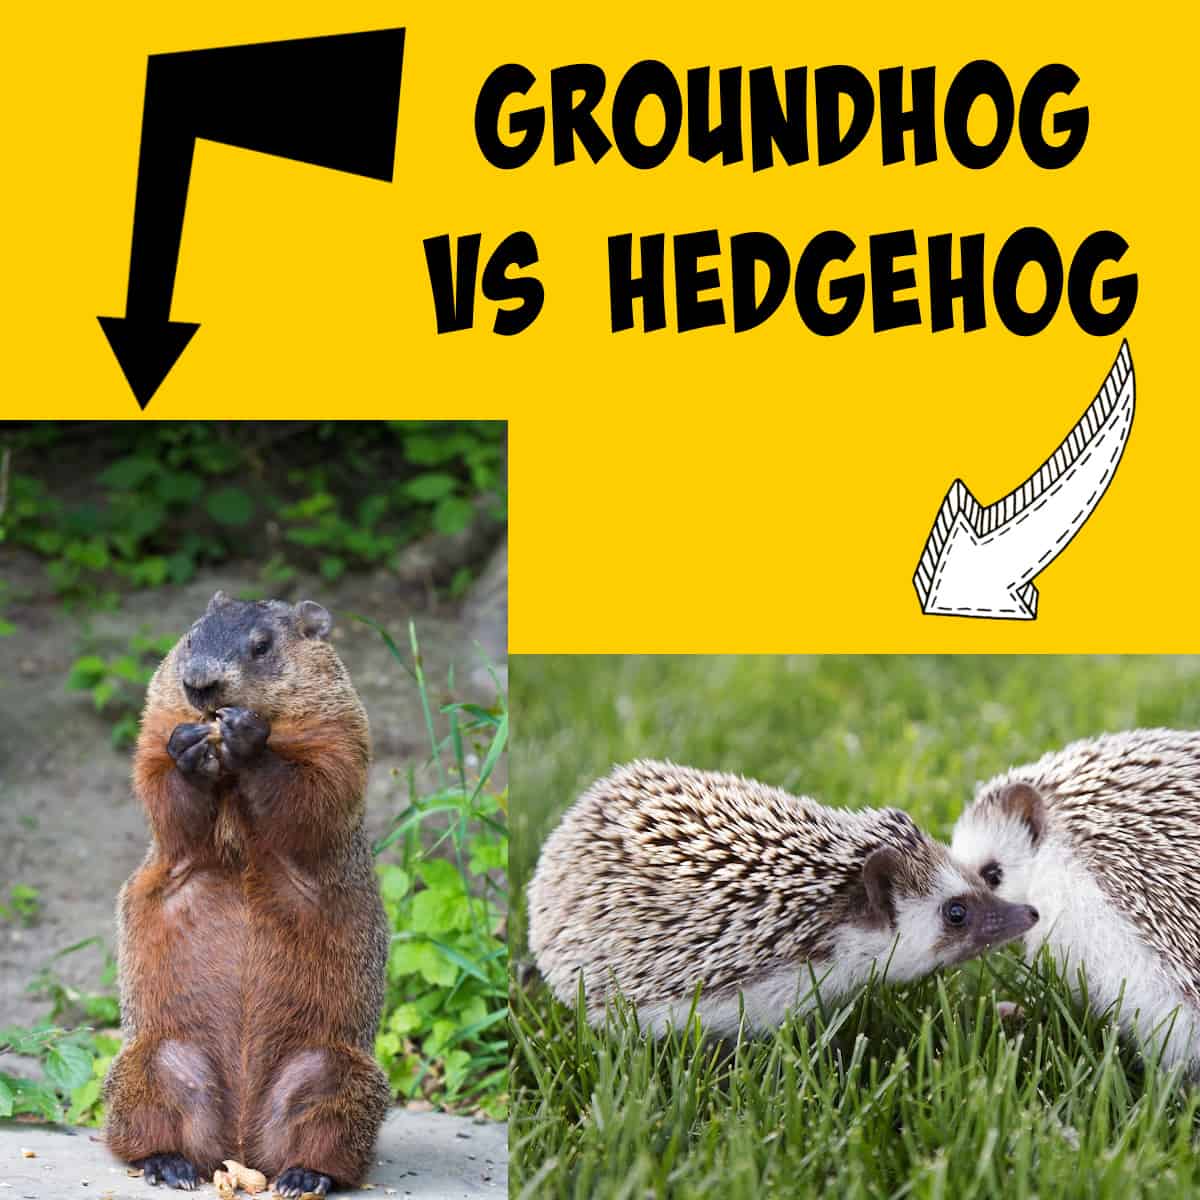 Hedgehog and Groundhog side by side